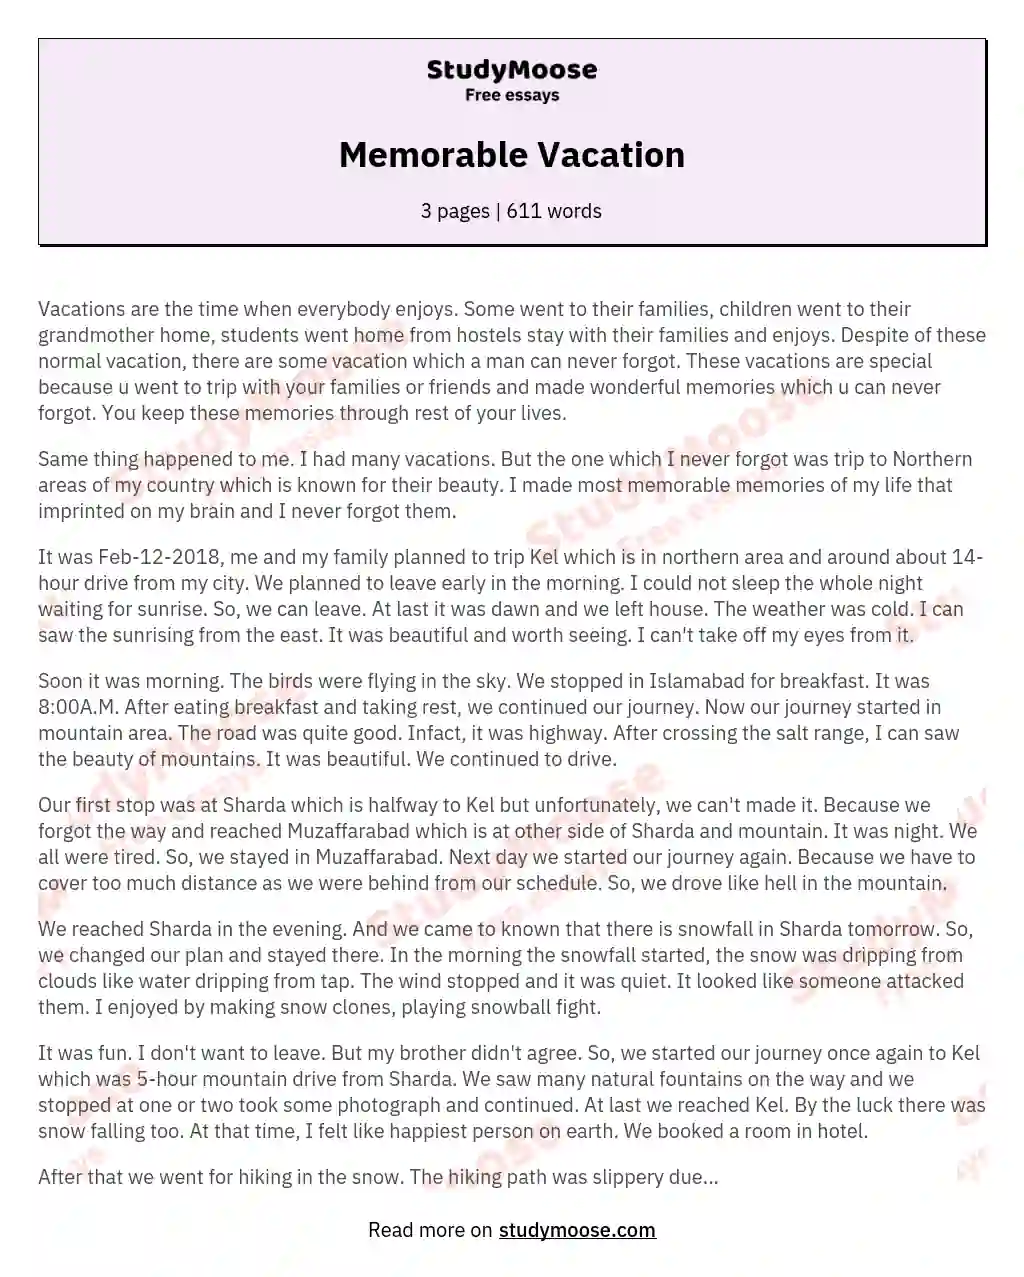 my unforgettable vacation essay